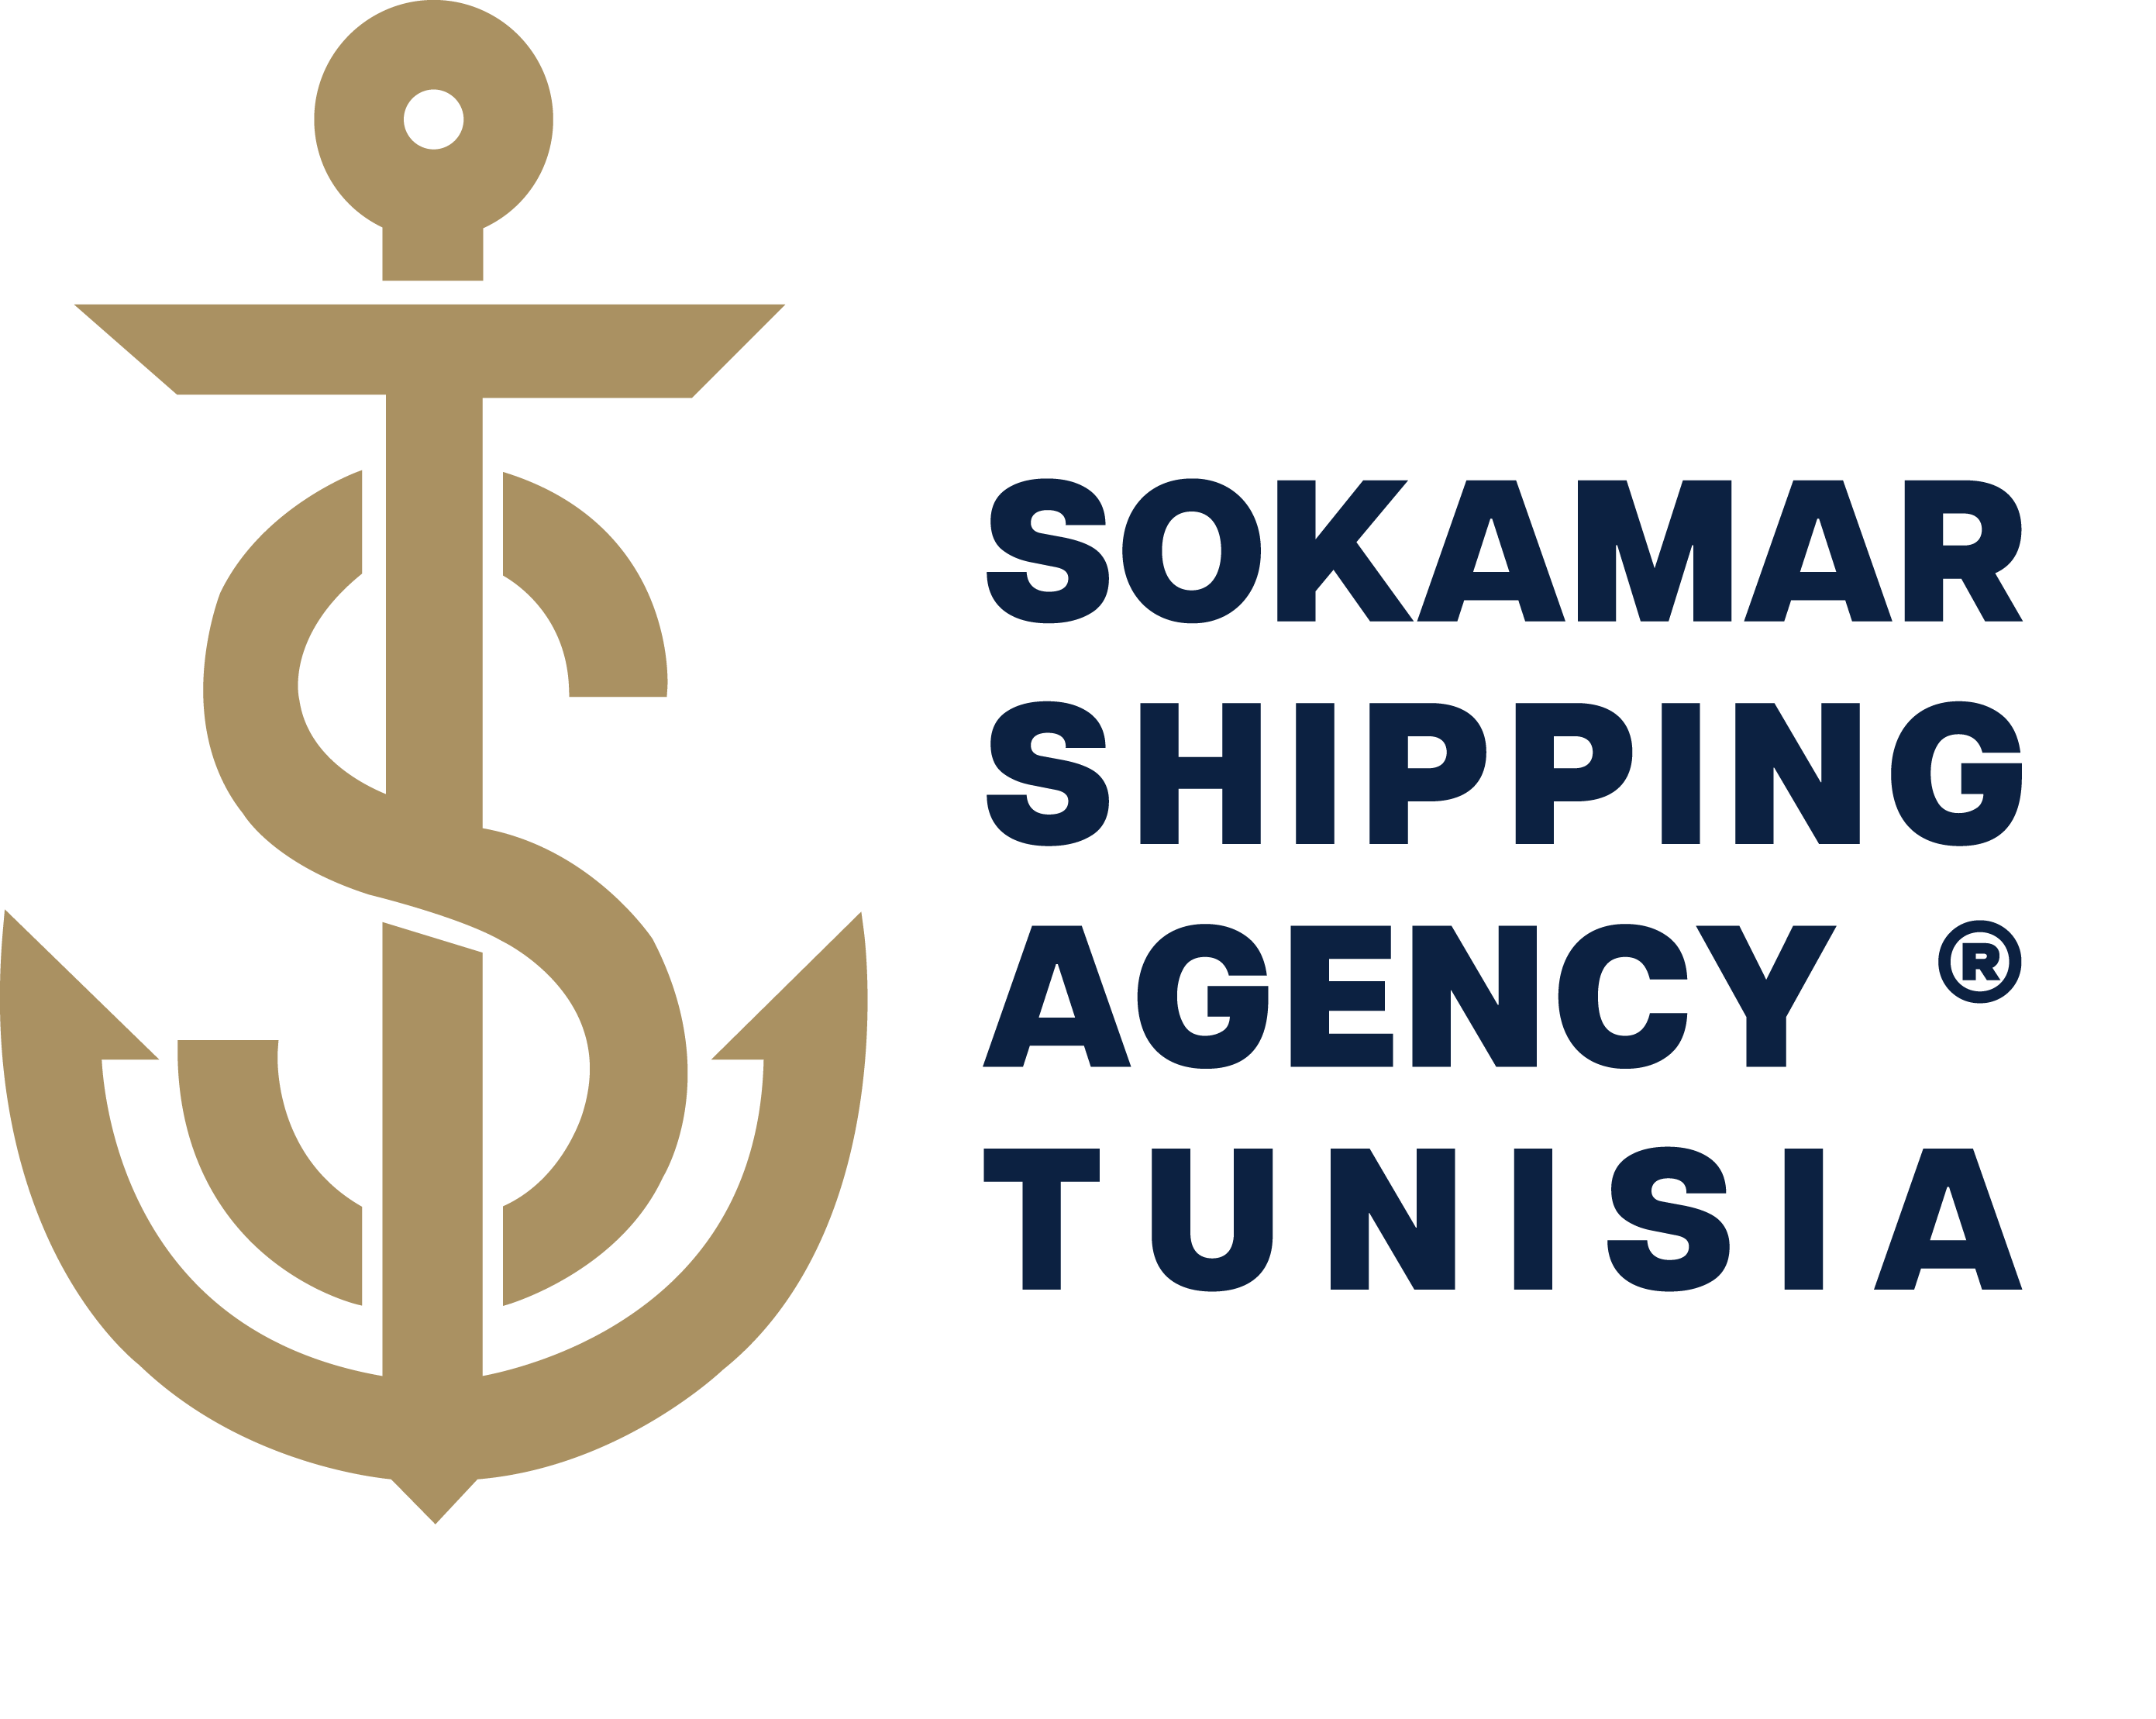 SOKAMAR SHIPPING AGENCY TUNISIA